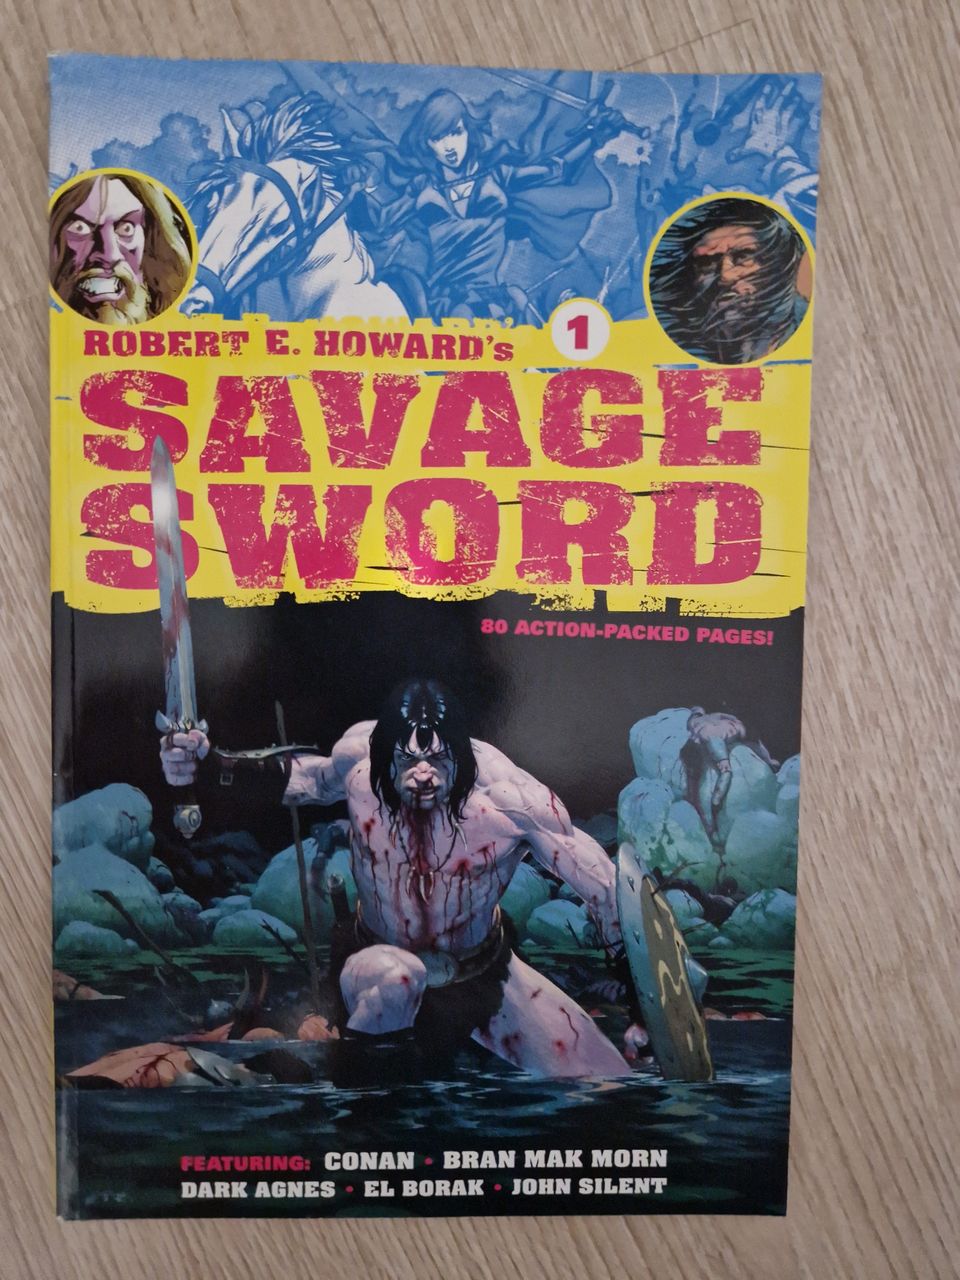 Robert E. Howard's Savage sword 1